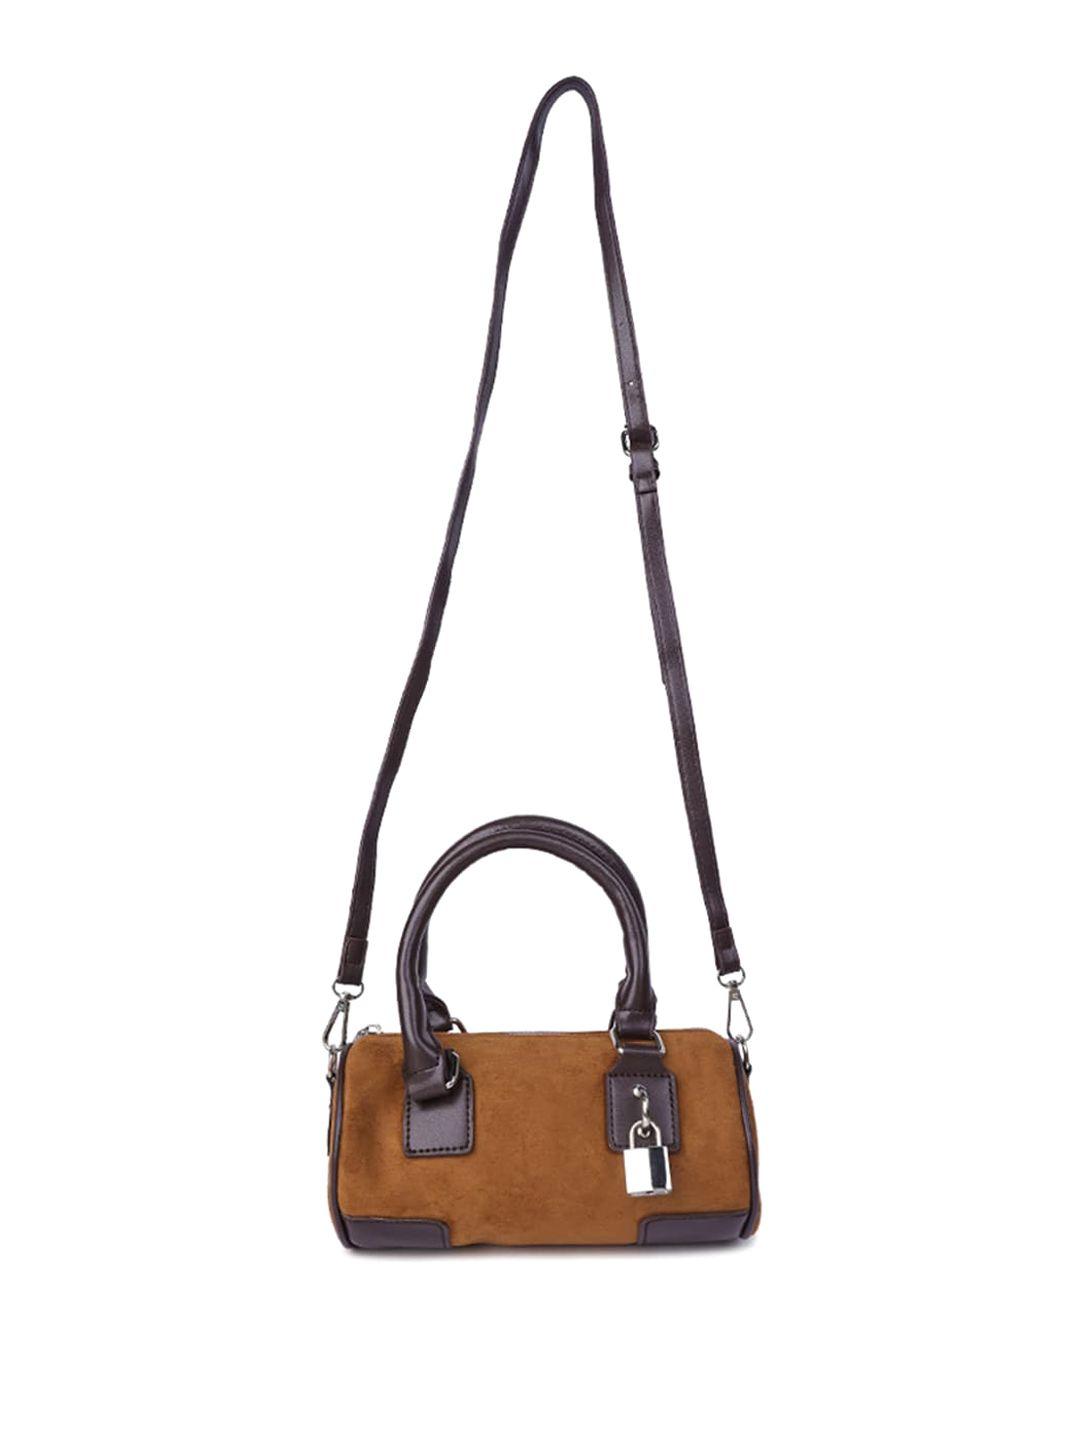 london rag mini duffle bag with detachable shoulder strap and handles